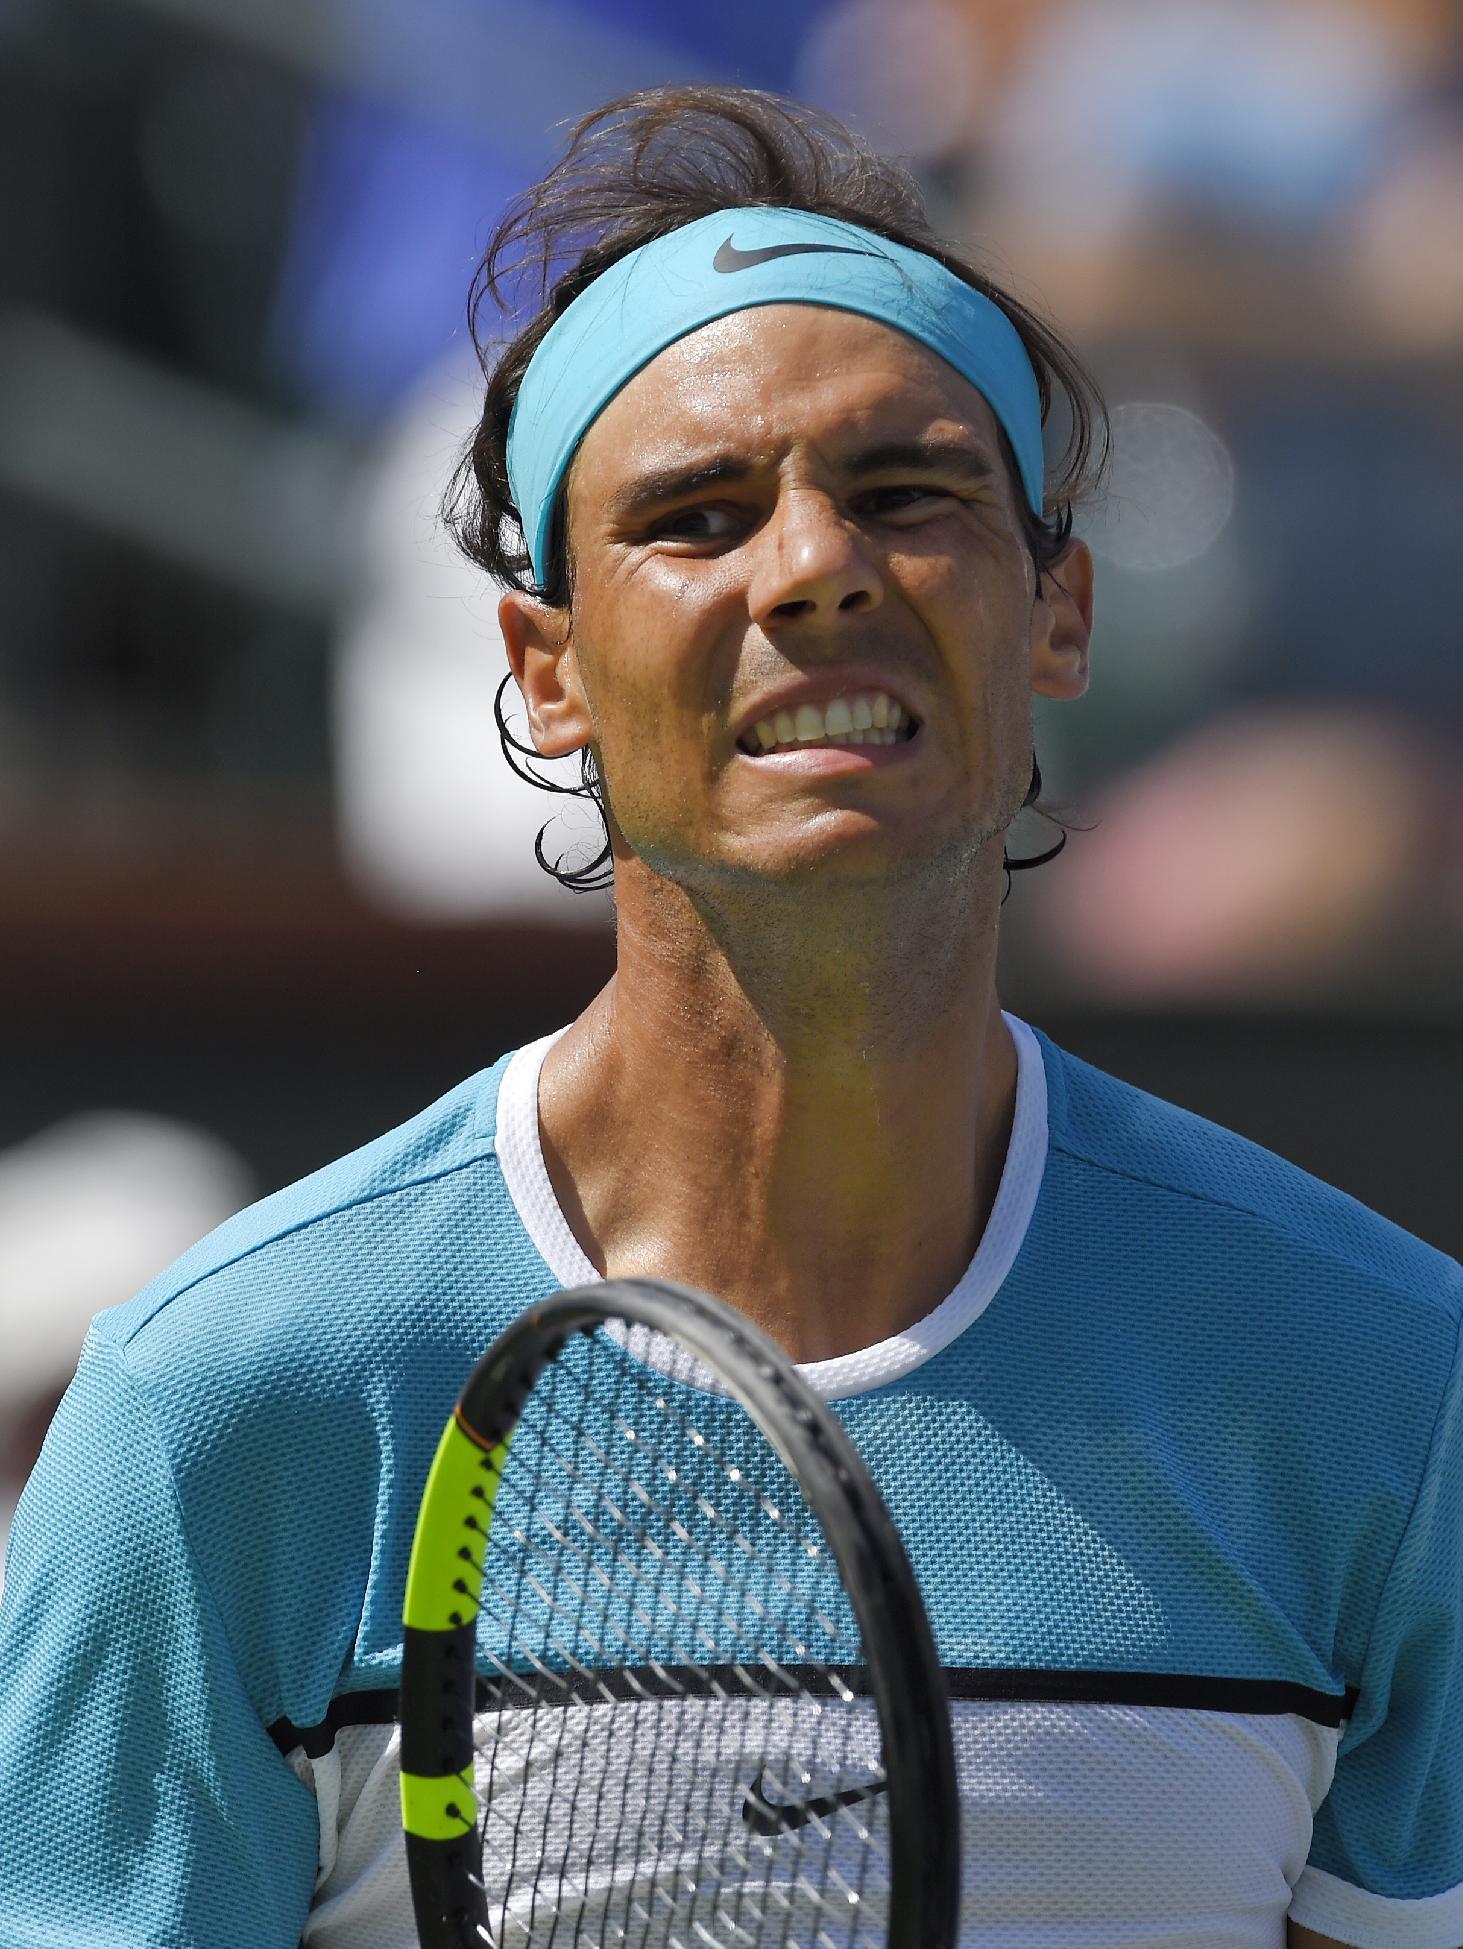 PHOTOS: Rafael Nadal loses to Novak Djokovic in Indian Wells semi-final – Rafael ...